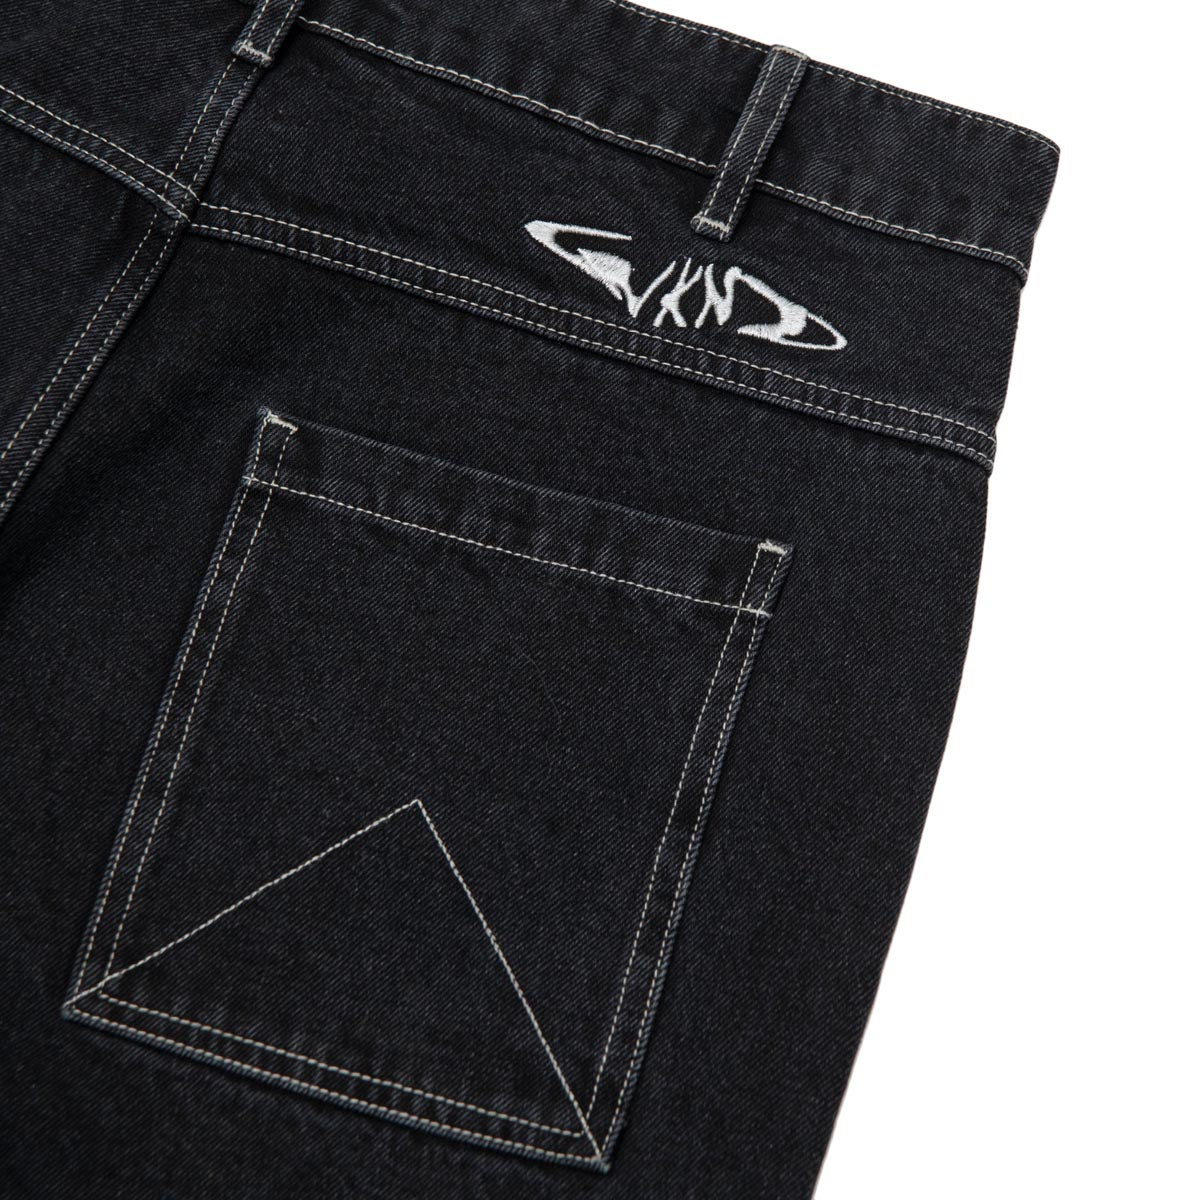 WKND Gene's Jeans - Black Wash image 3